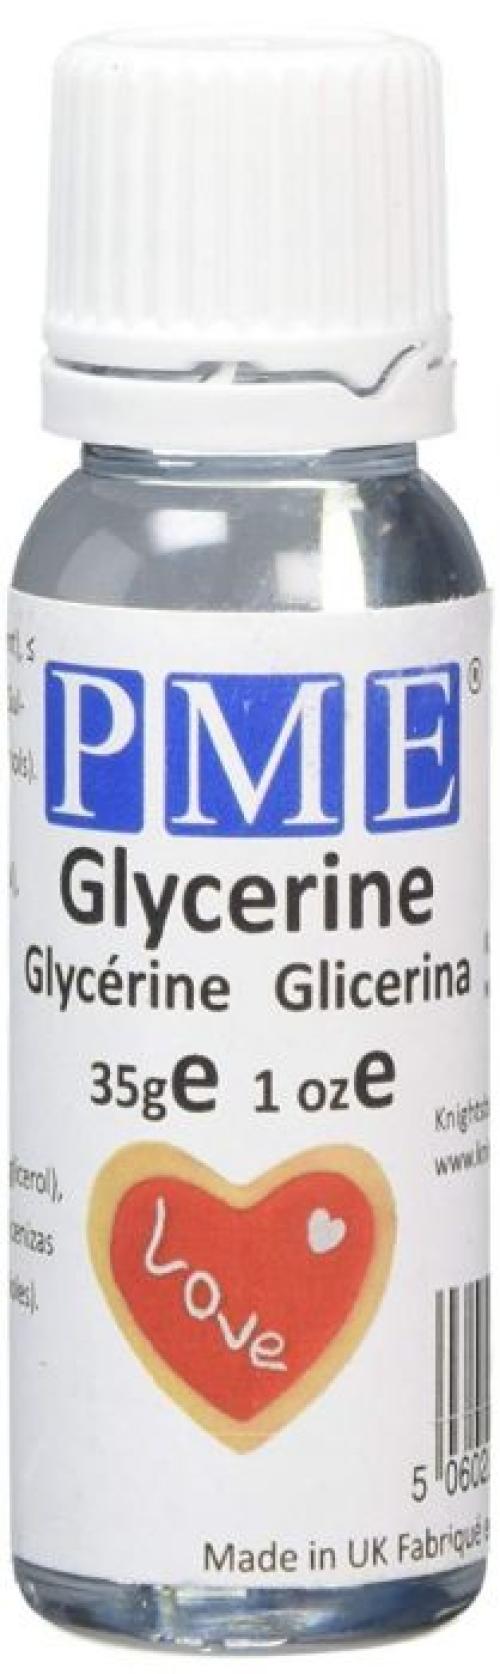 Glyserin PME 35g